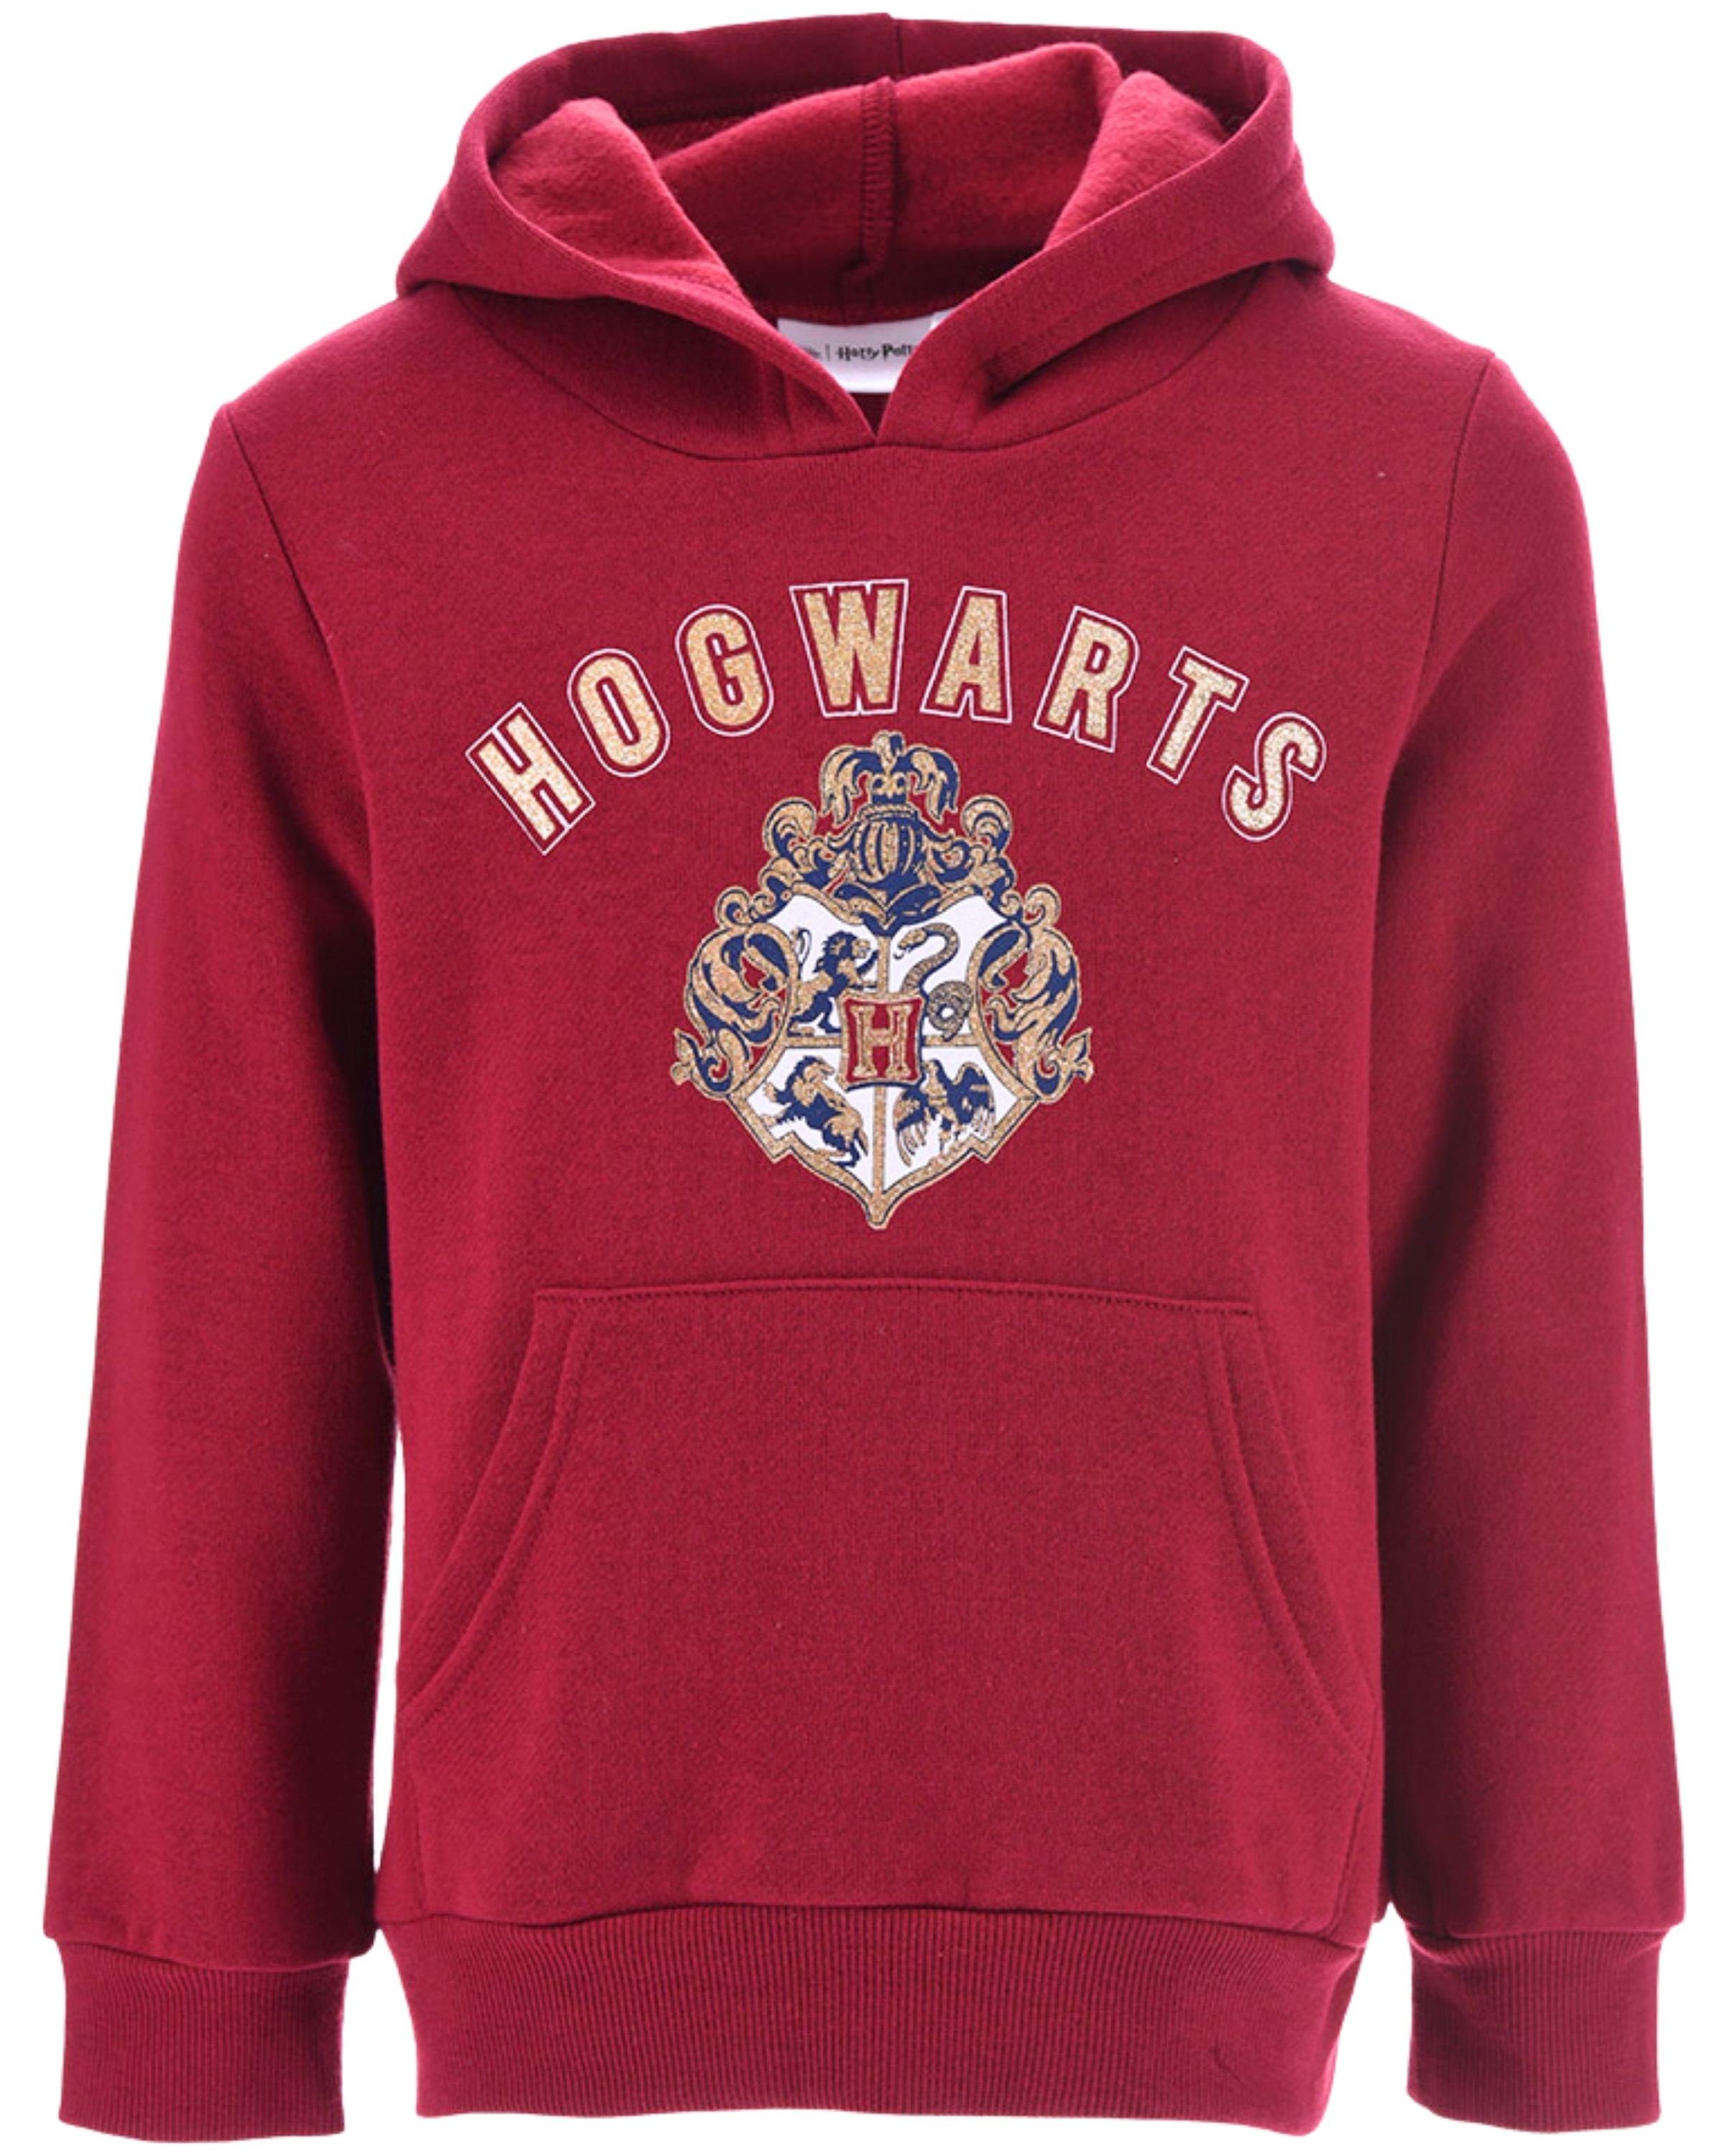 Harry Potter Hoodie Hogwarts Mädchen Kapuzenpullover 152 Gr. 116 cm - Dunkelrot